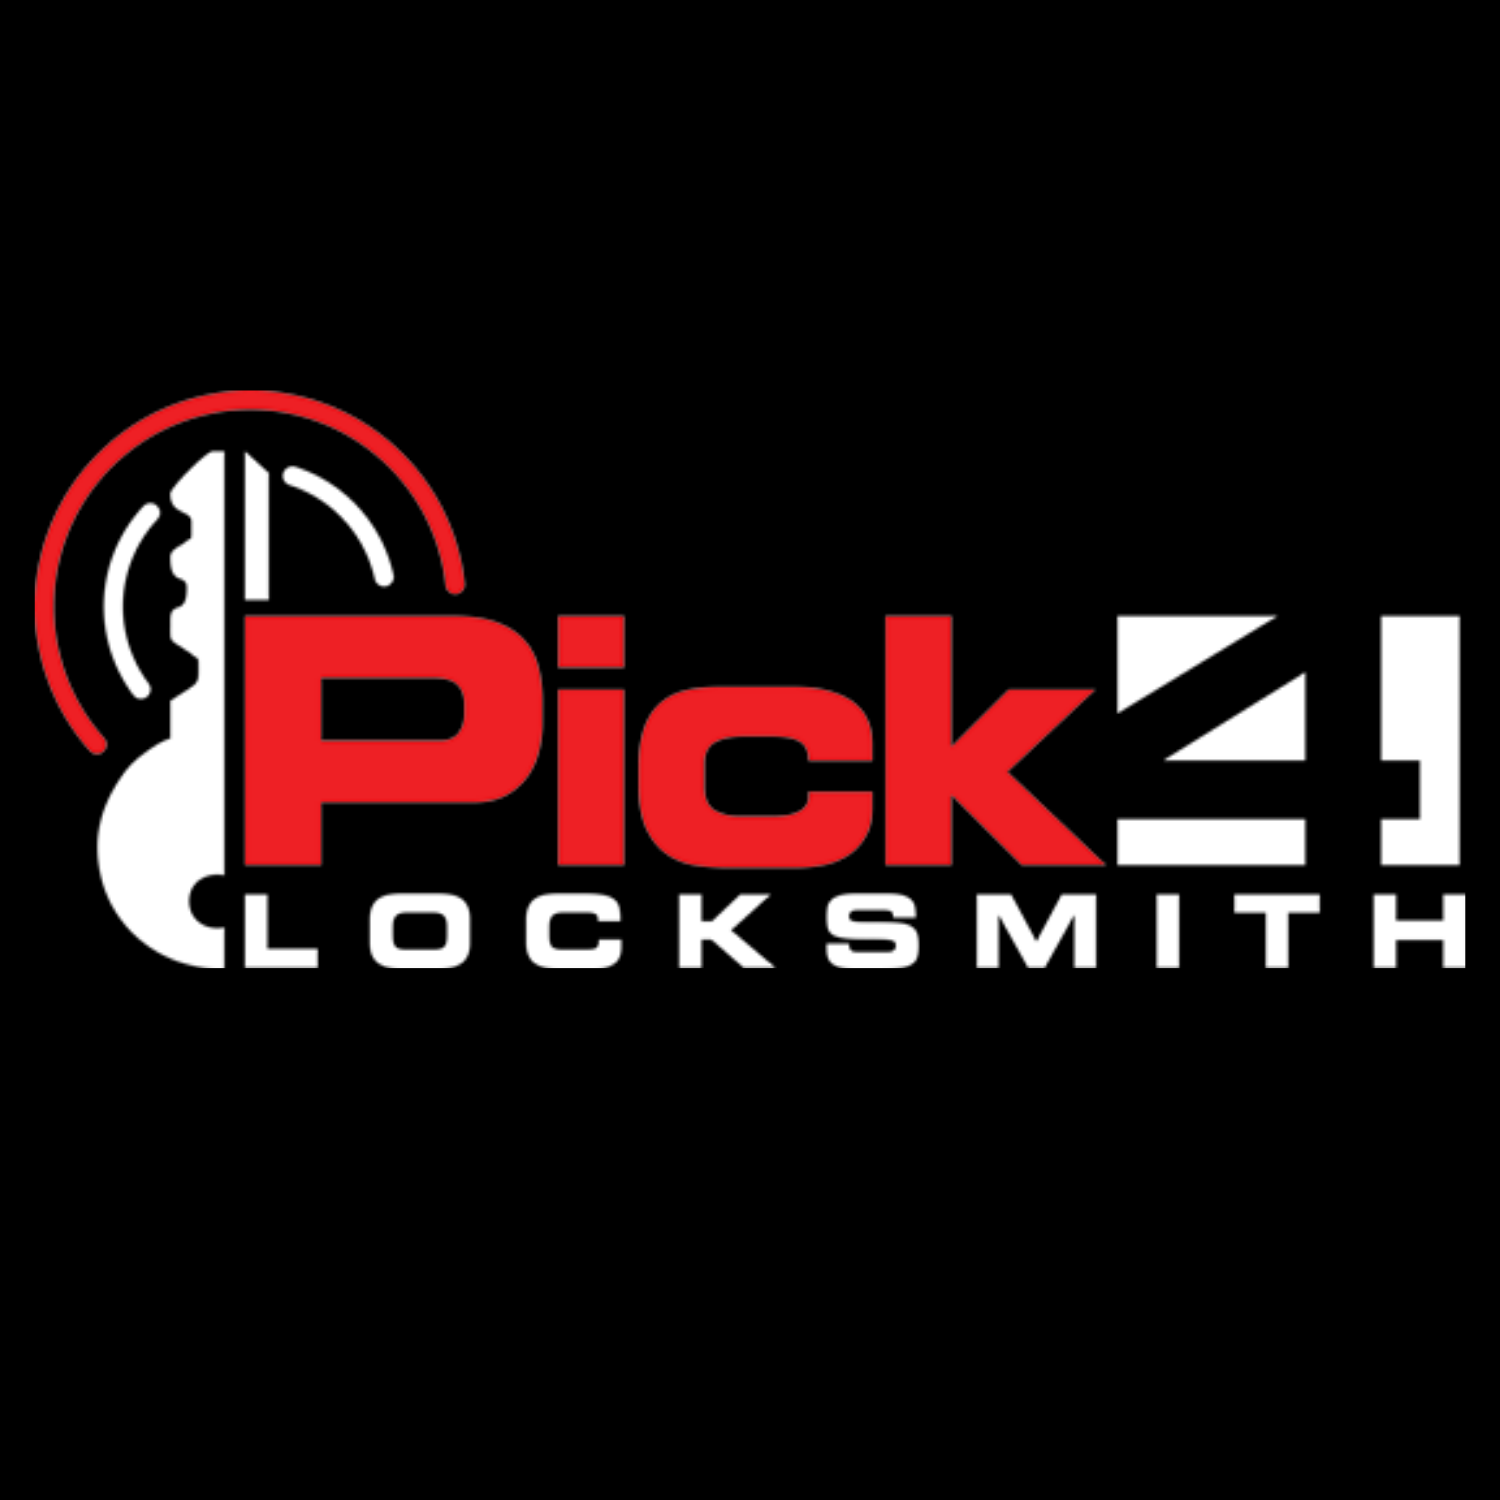 Pick4 Locksmith